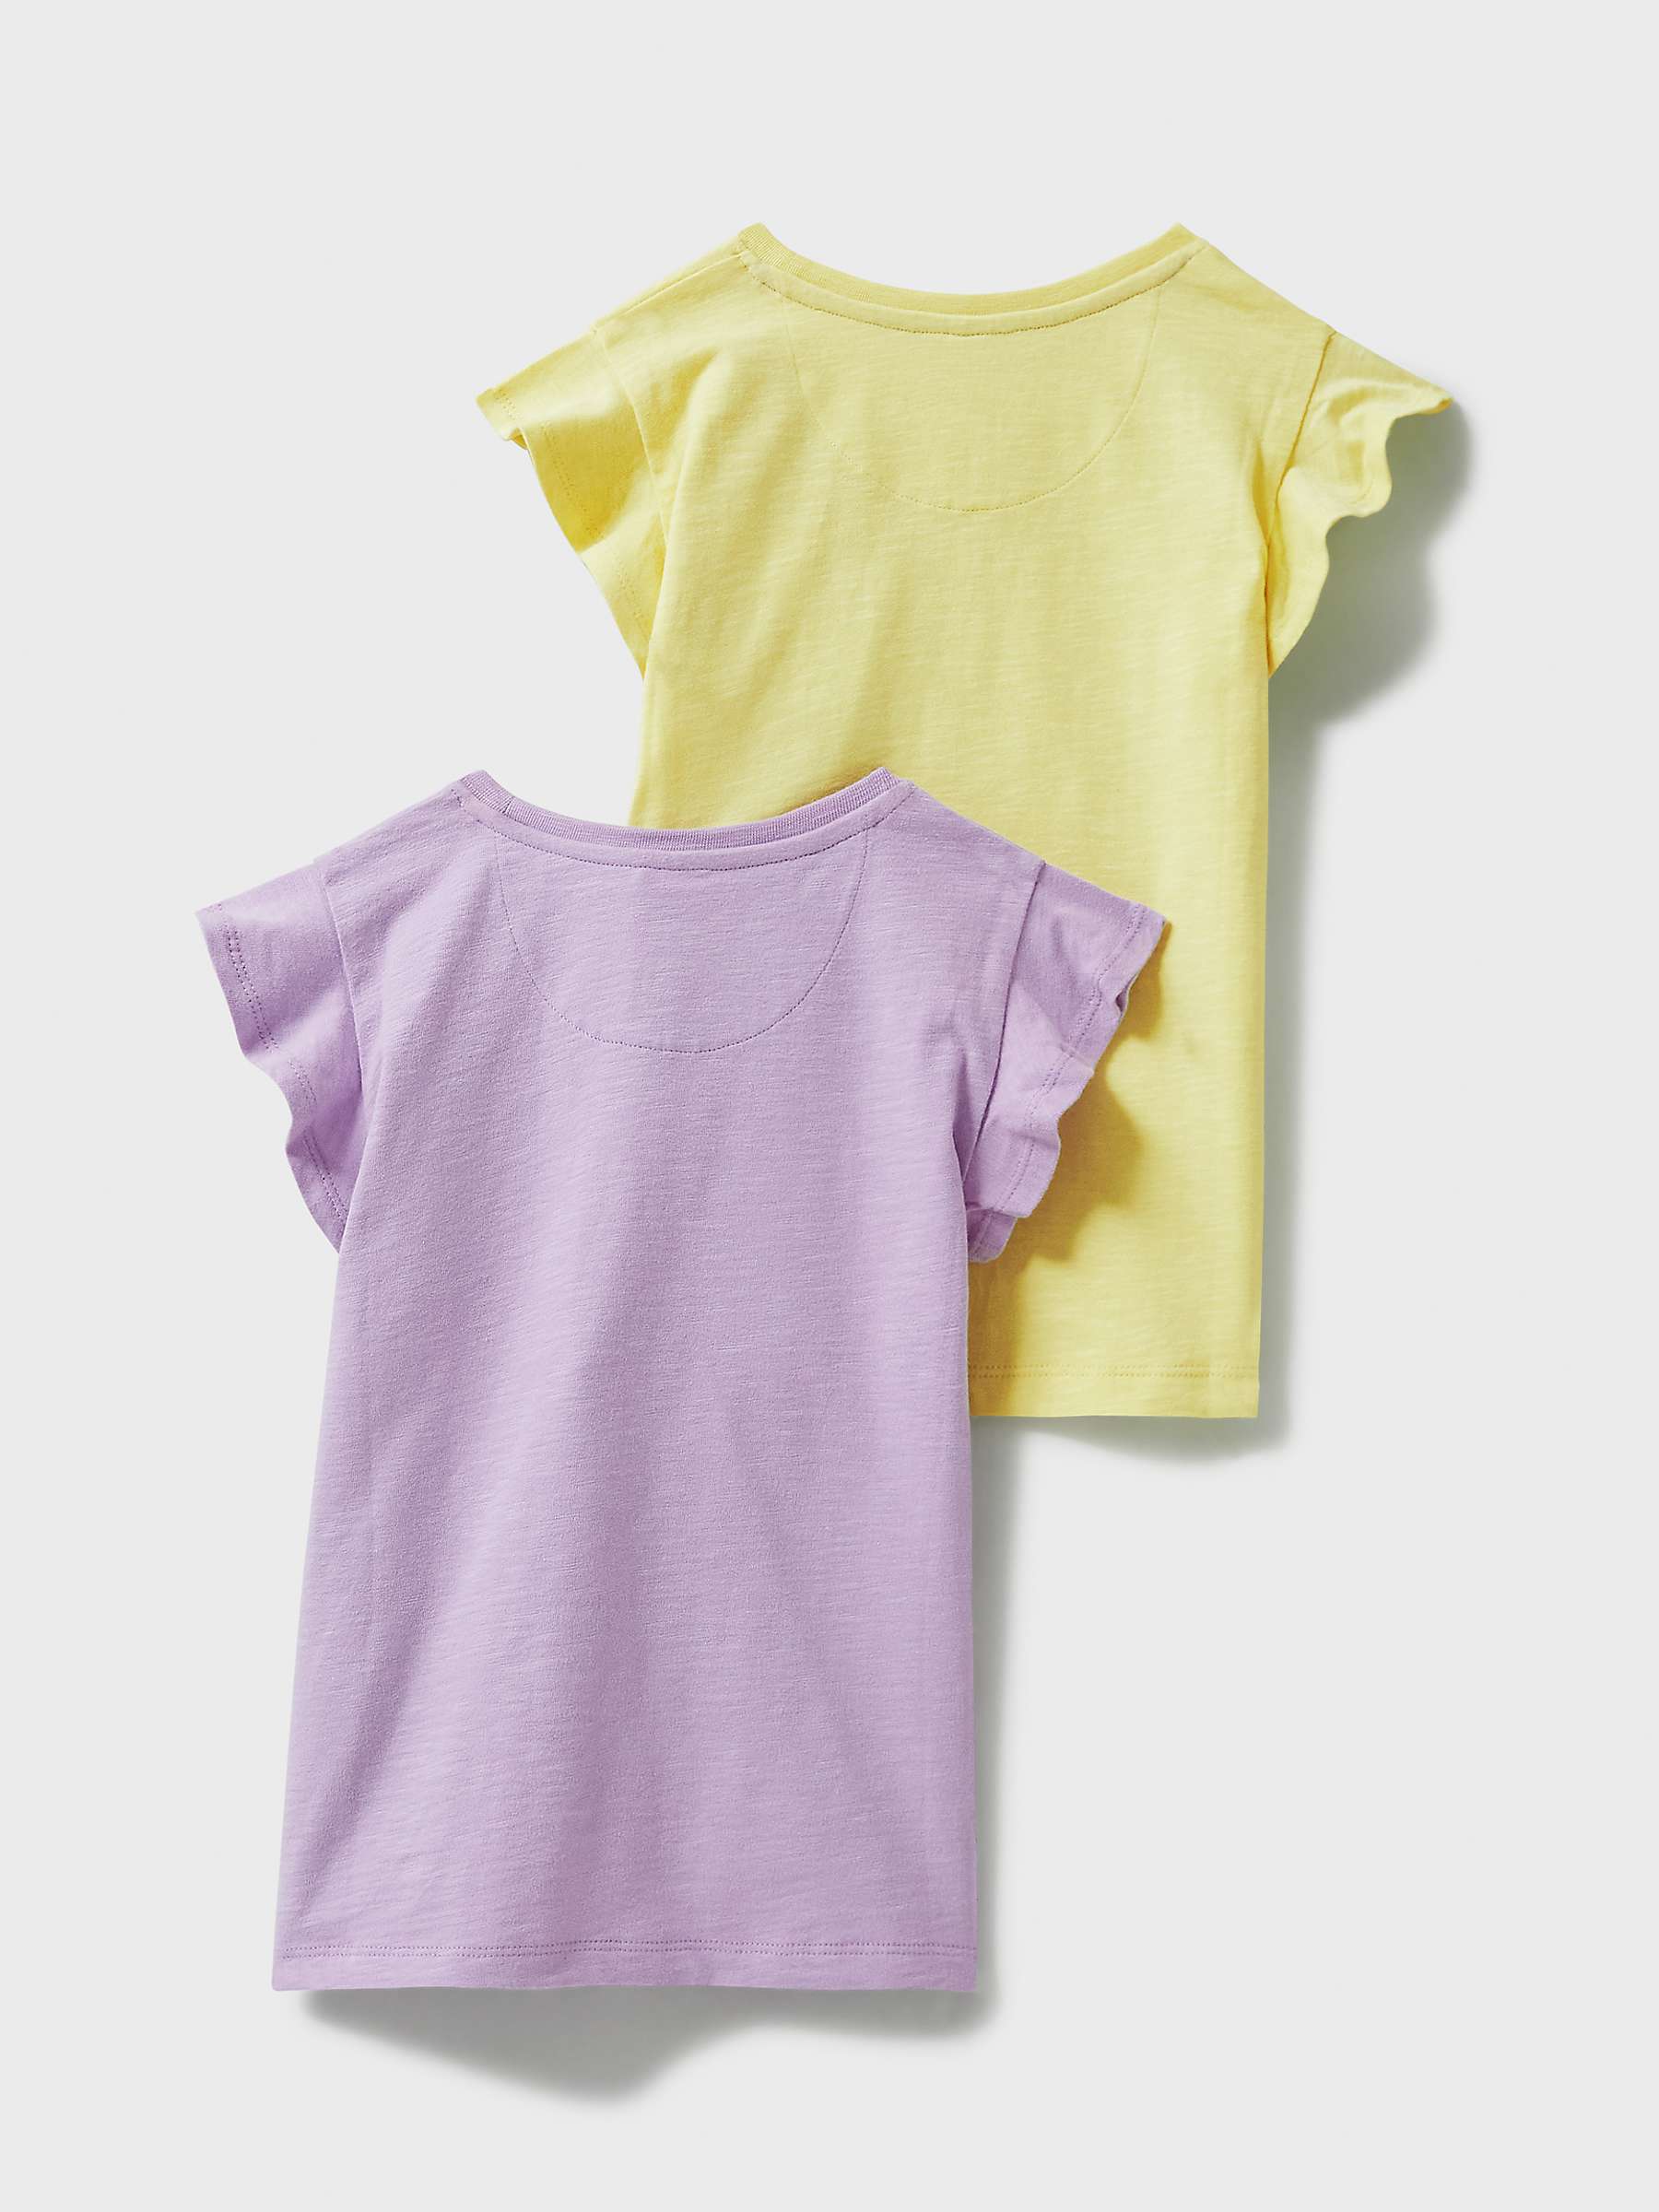 Buy Crew Clothing Kids' Ric Rac Trim Pocket Detail T-Shirts, Pack of 2, Lilac/Yellow Online at johnlewis.com